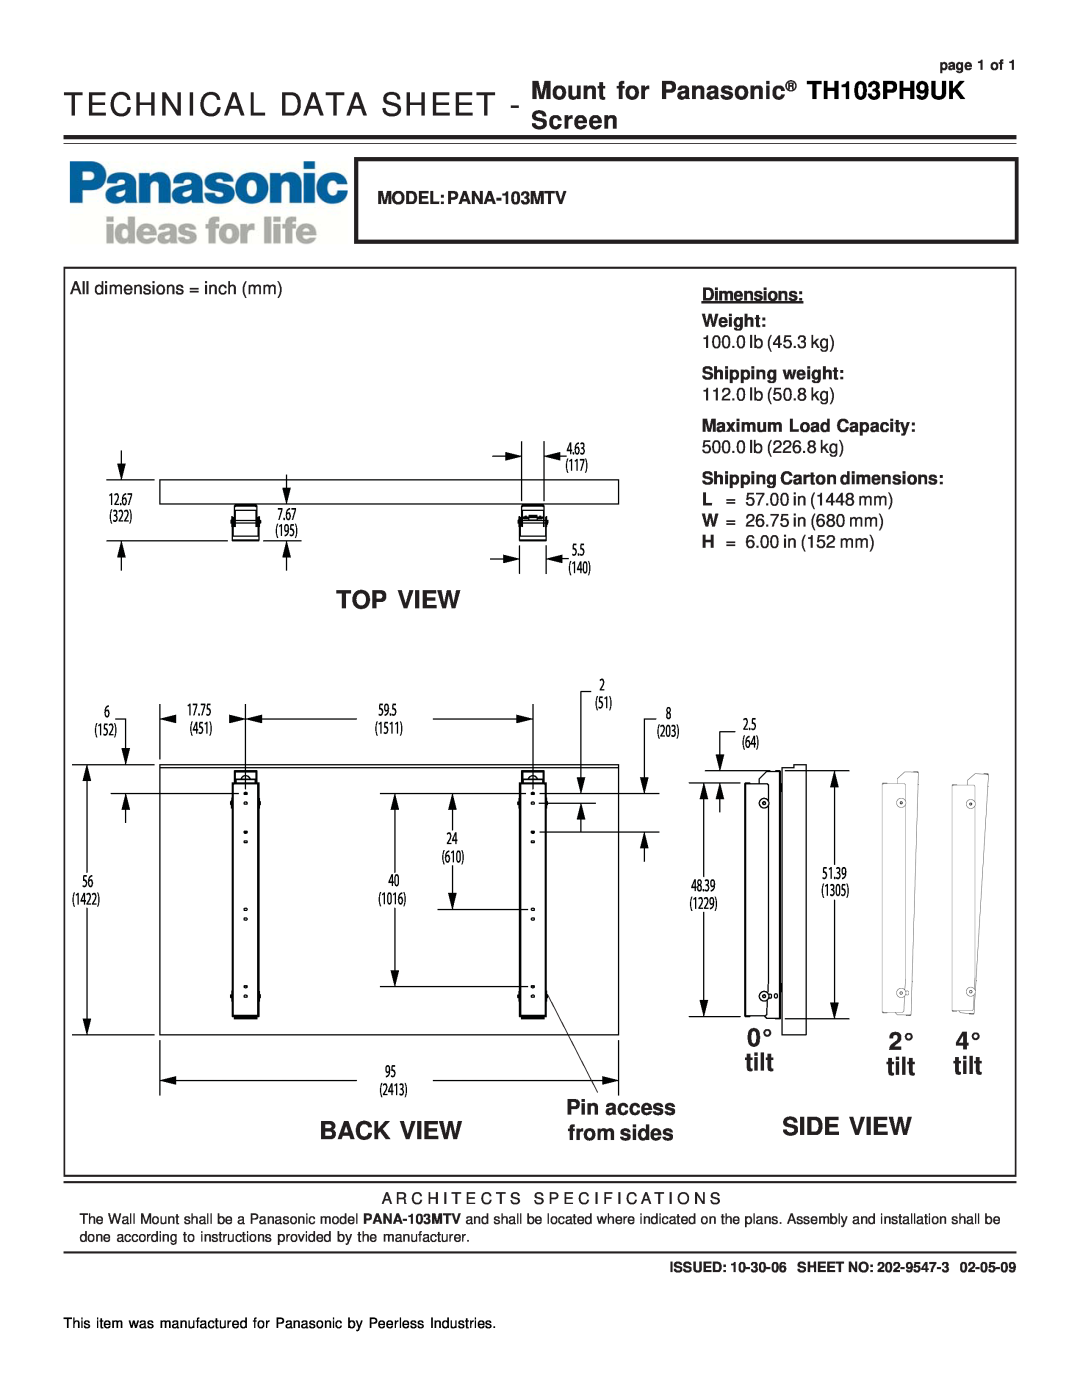 Panasonic dimensions TECHNICAL DATA SHEET - Mount for Panasonic TH103PH9UK Screen, Top View, tilt, Back View, 1422 